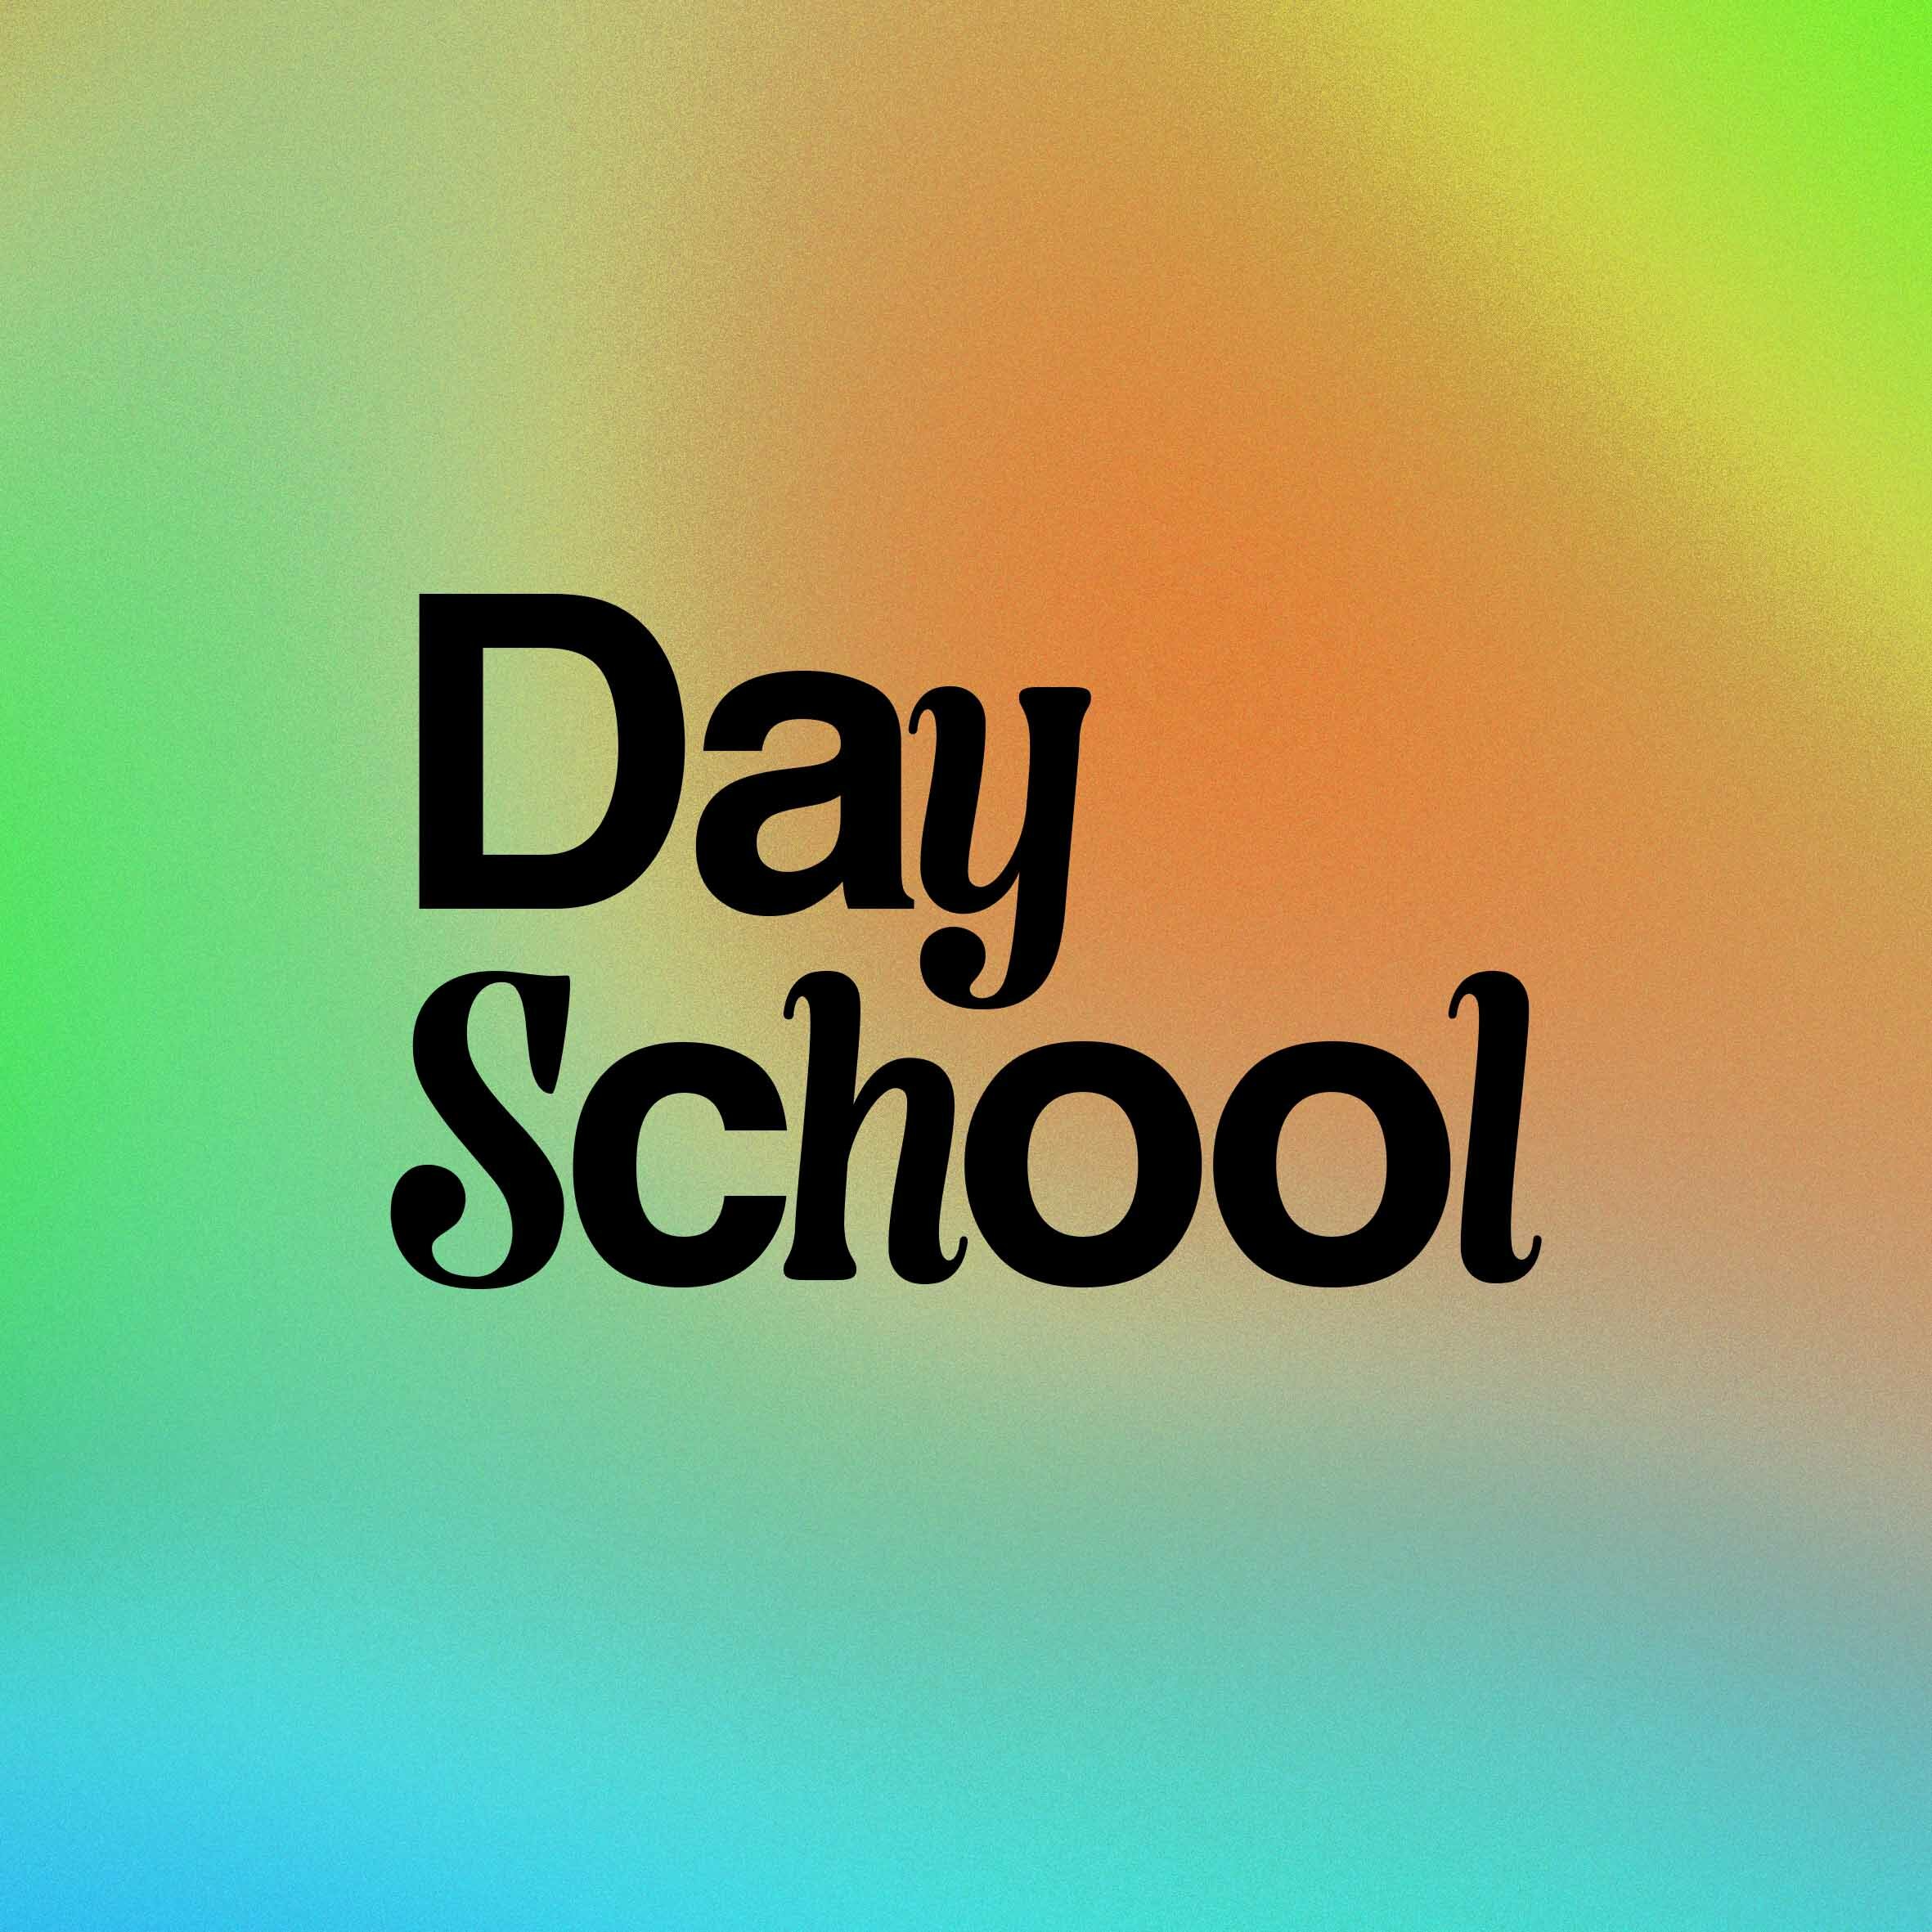 Day school logo